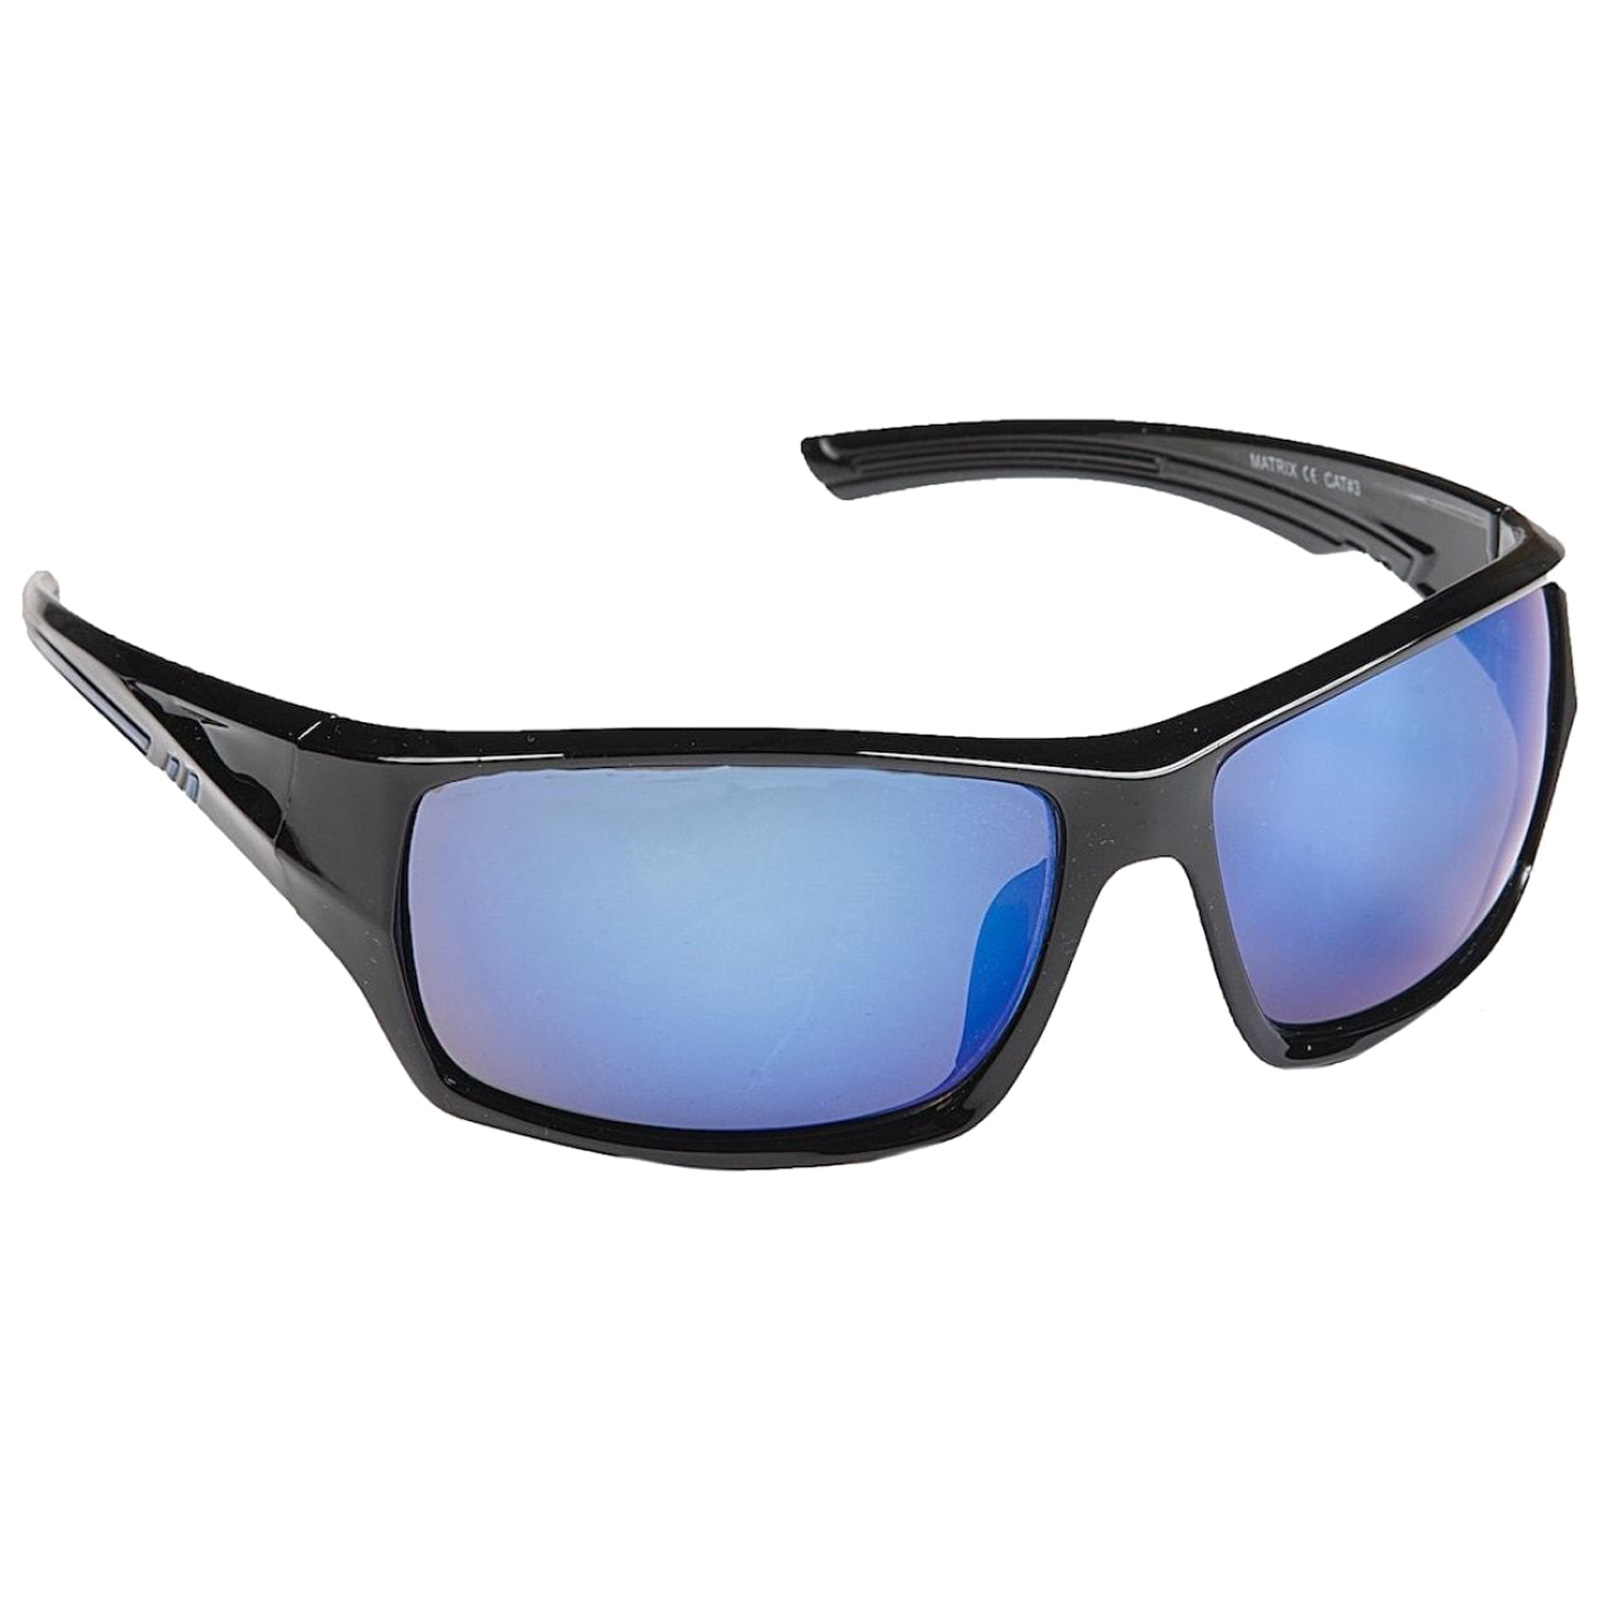 Eyelevel Mens Dallas Sunglasses UV400 UVA UVB Protection Anti Glare Big Lens 